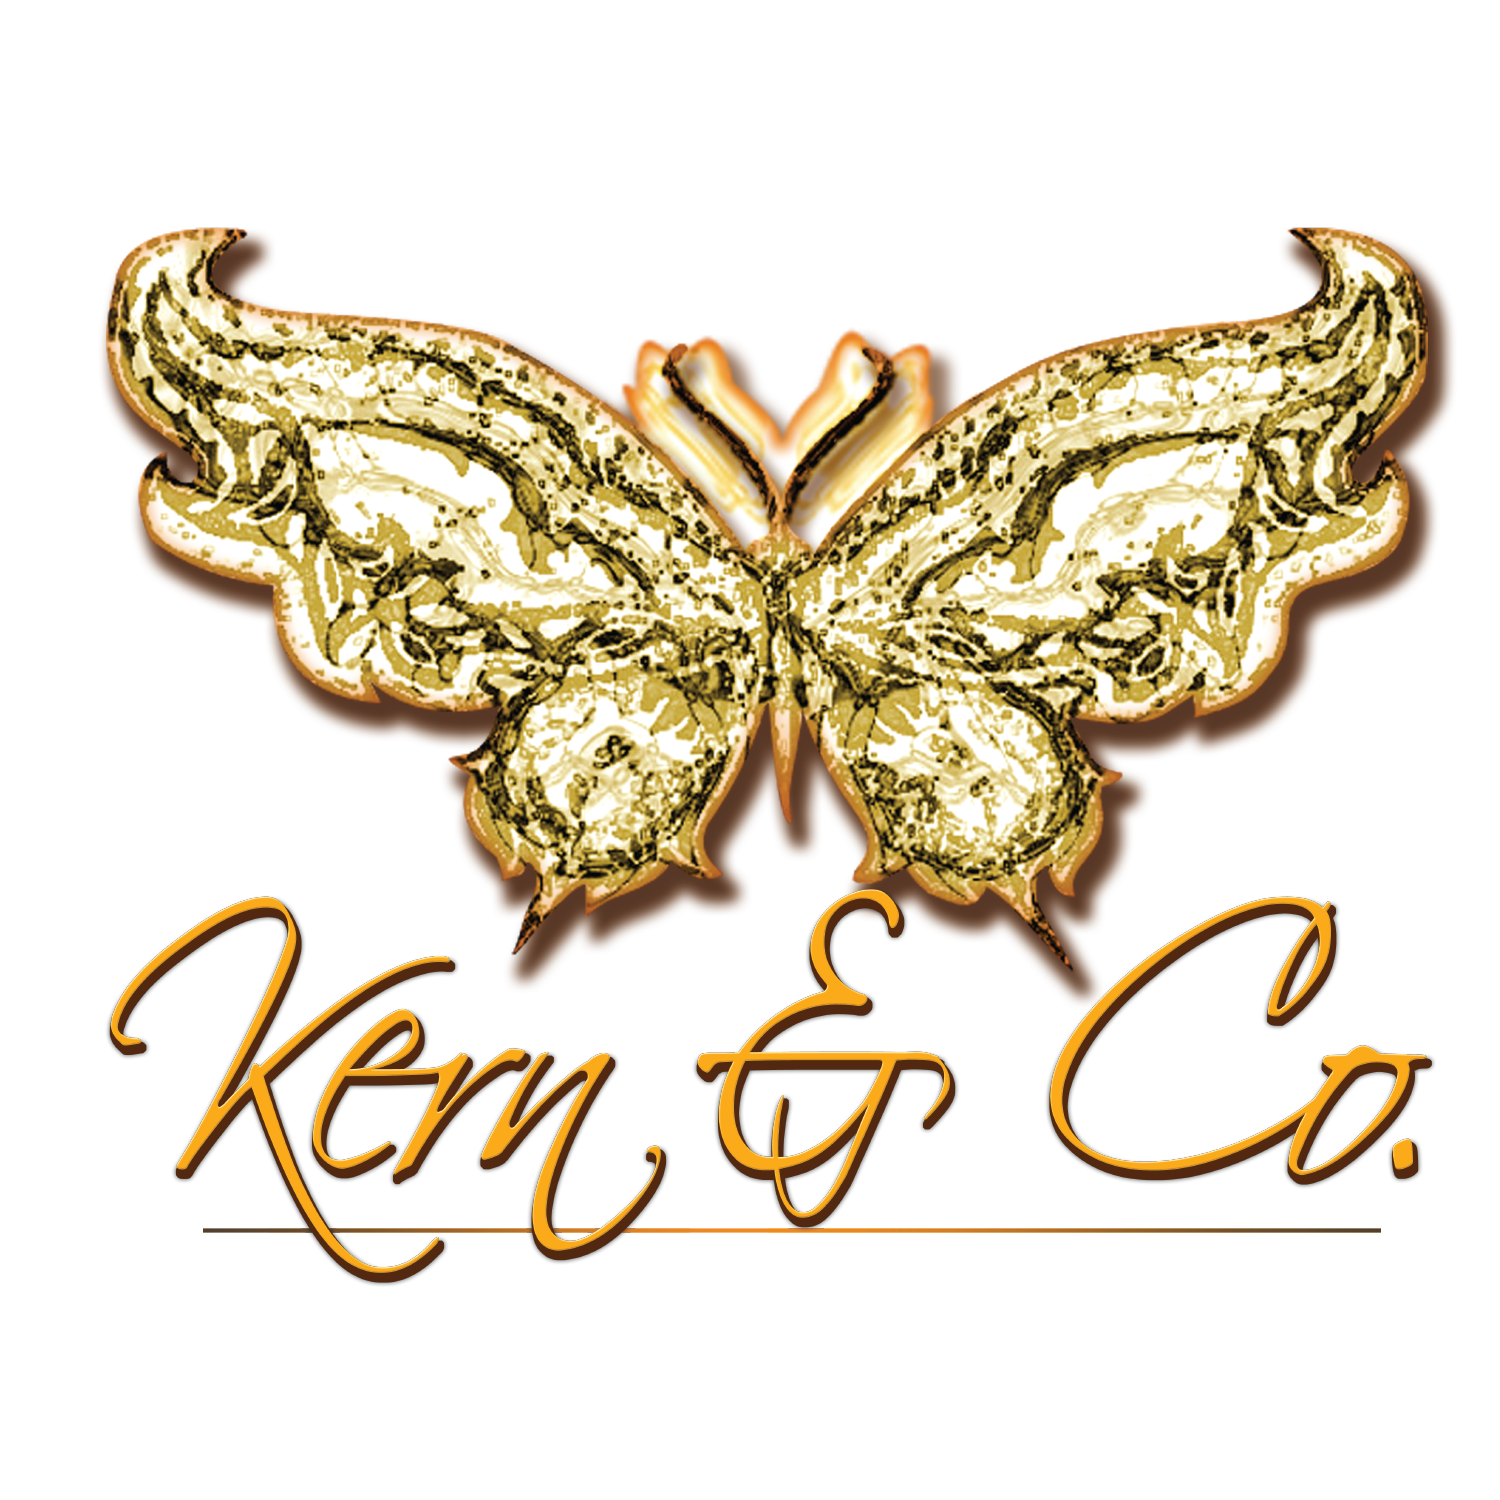 https://kerncodesigns.com/wp-content/uploads/2020/09/KernCo-Logo-01.png